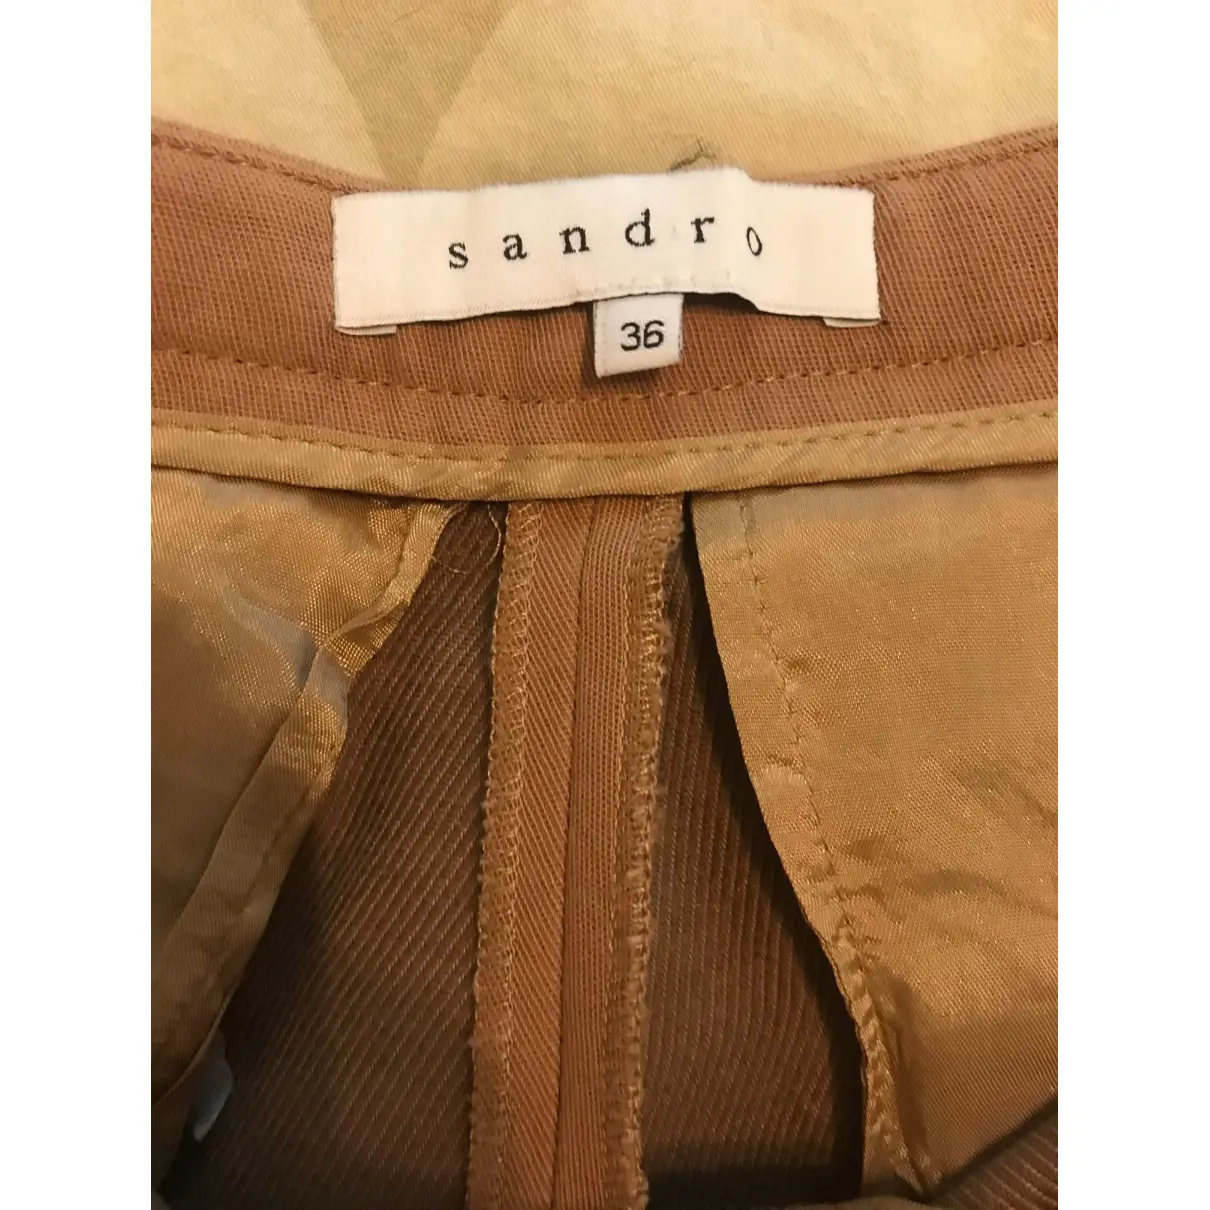 Buy Sandro Camel Cotton Shorts online